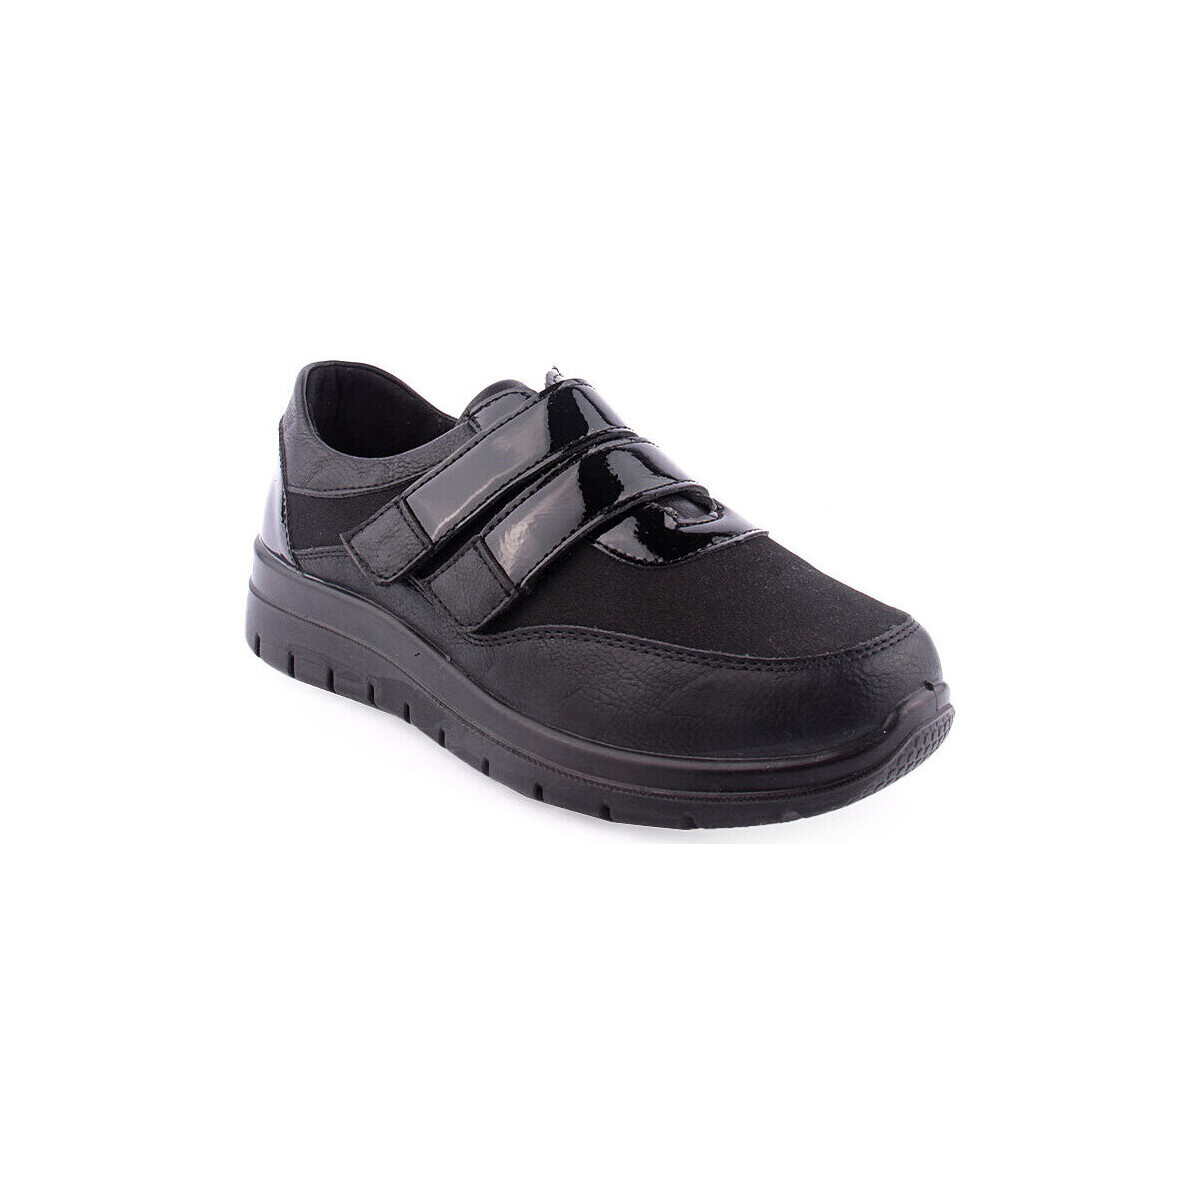 Zapatos Mujer Derbie Bebracci L Shoes Comfort Negro